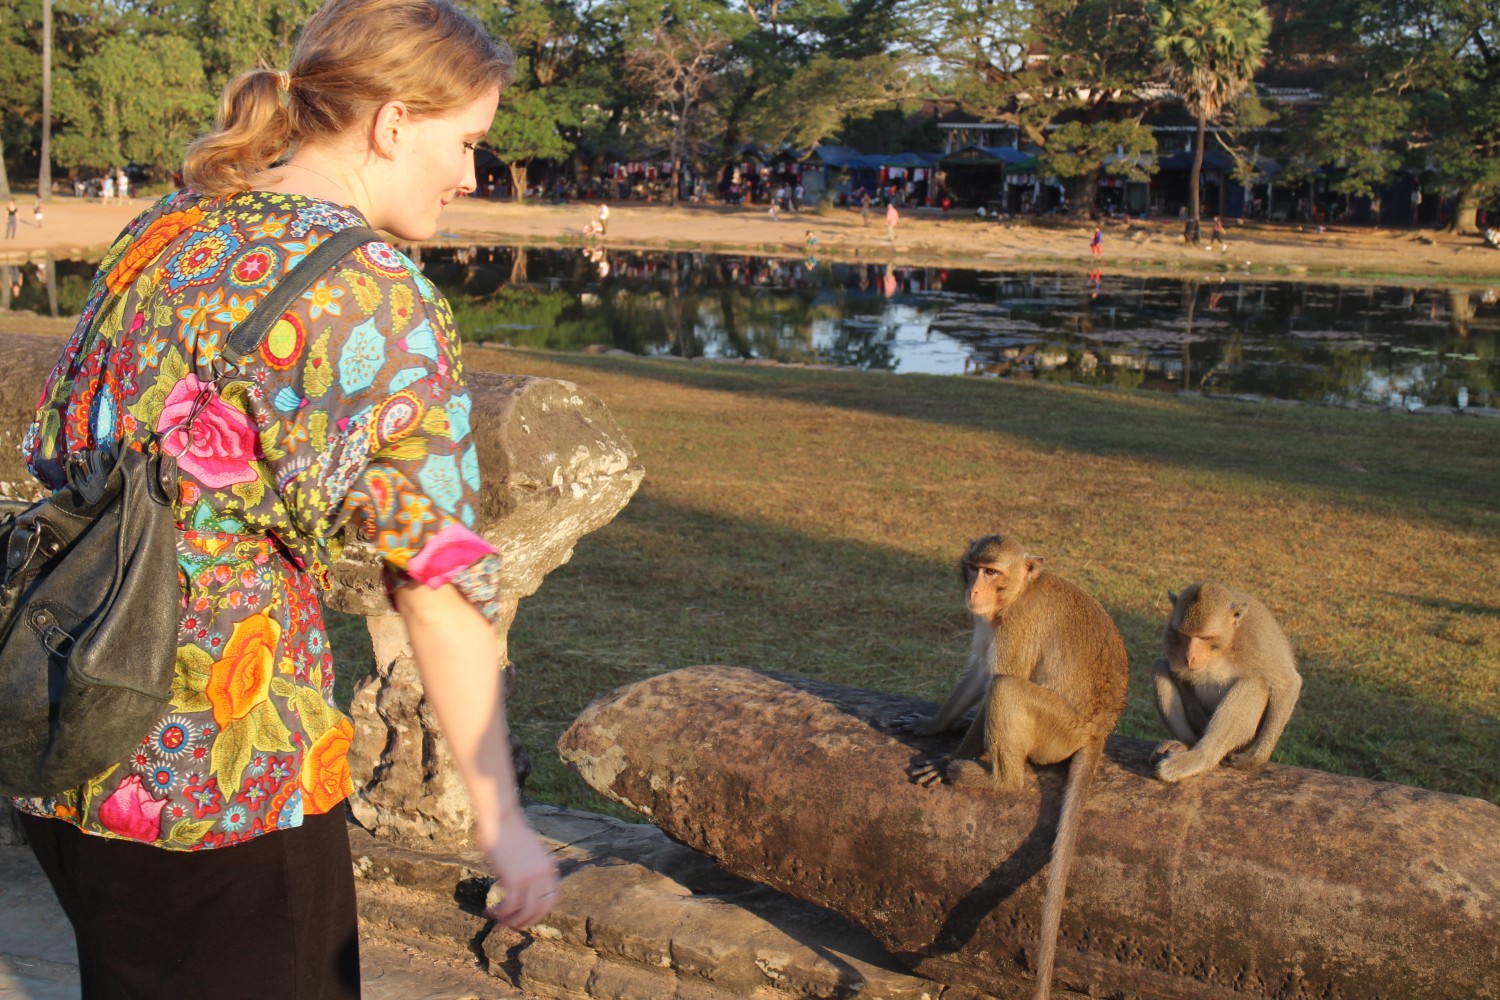 Angkor Wat Monkeys